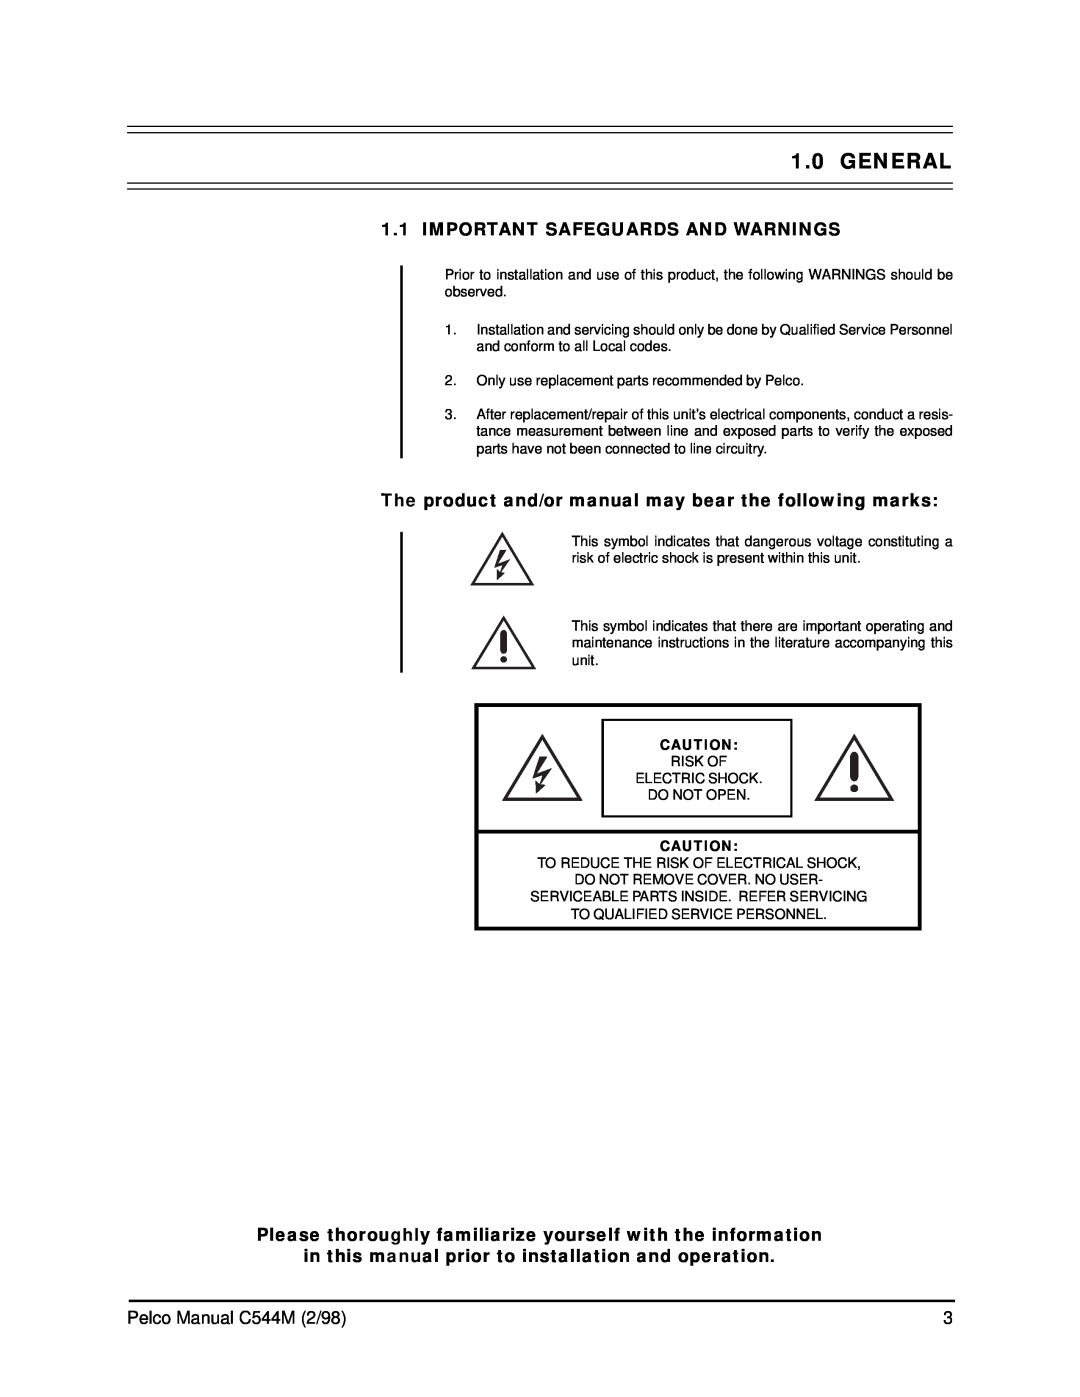 Pelco C538M manual General, Important Safeguards And Warnings, Pelco Manual C544M 2/98 